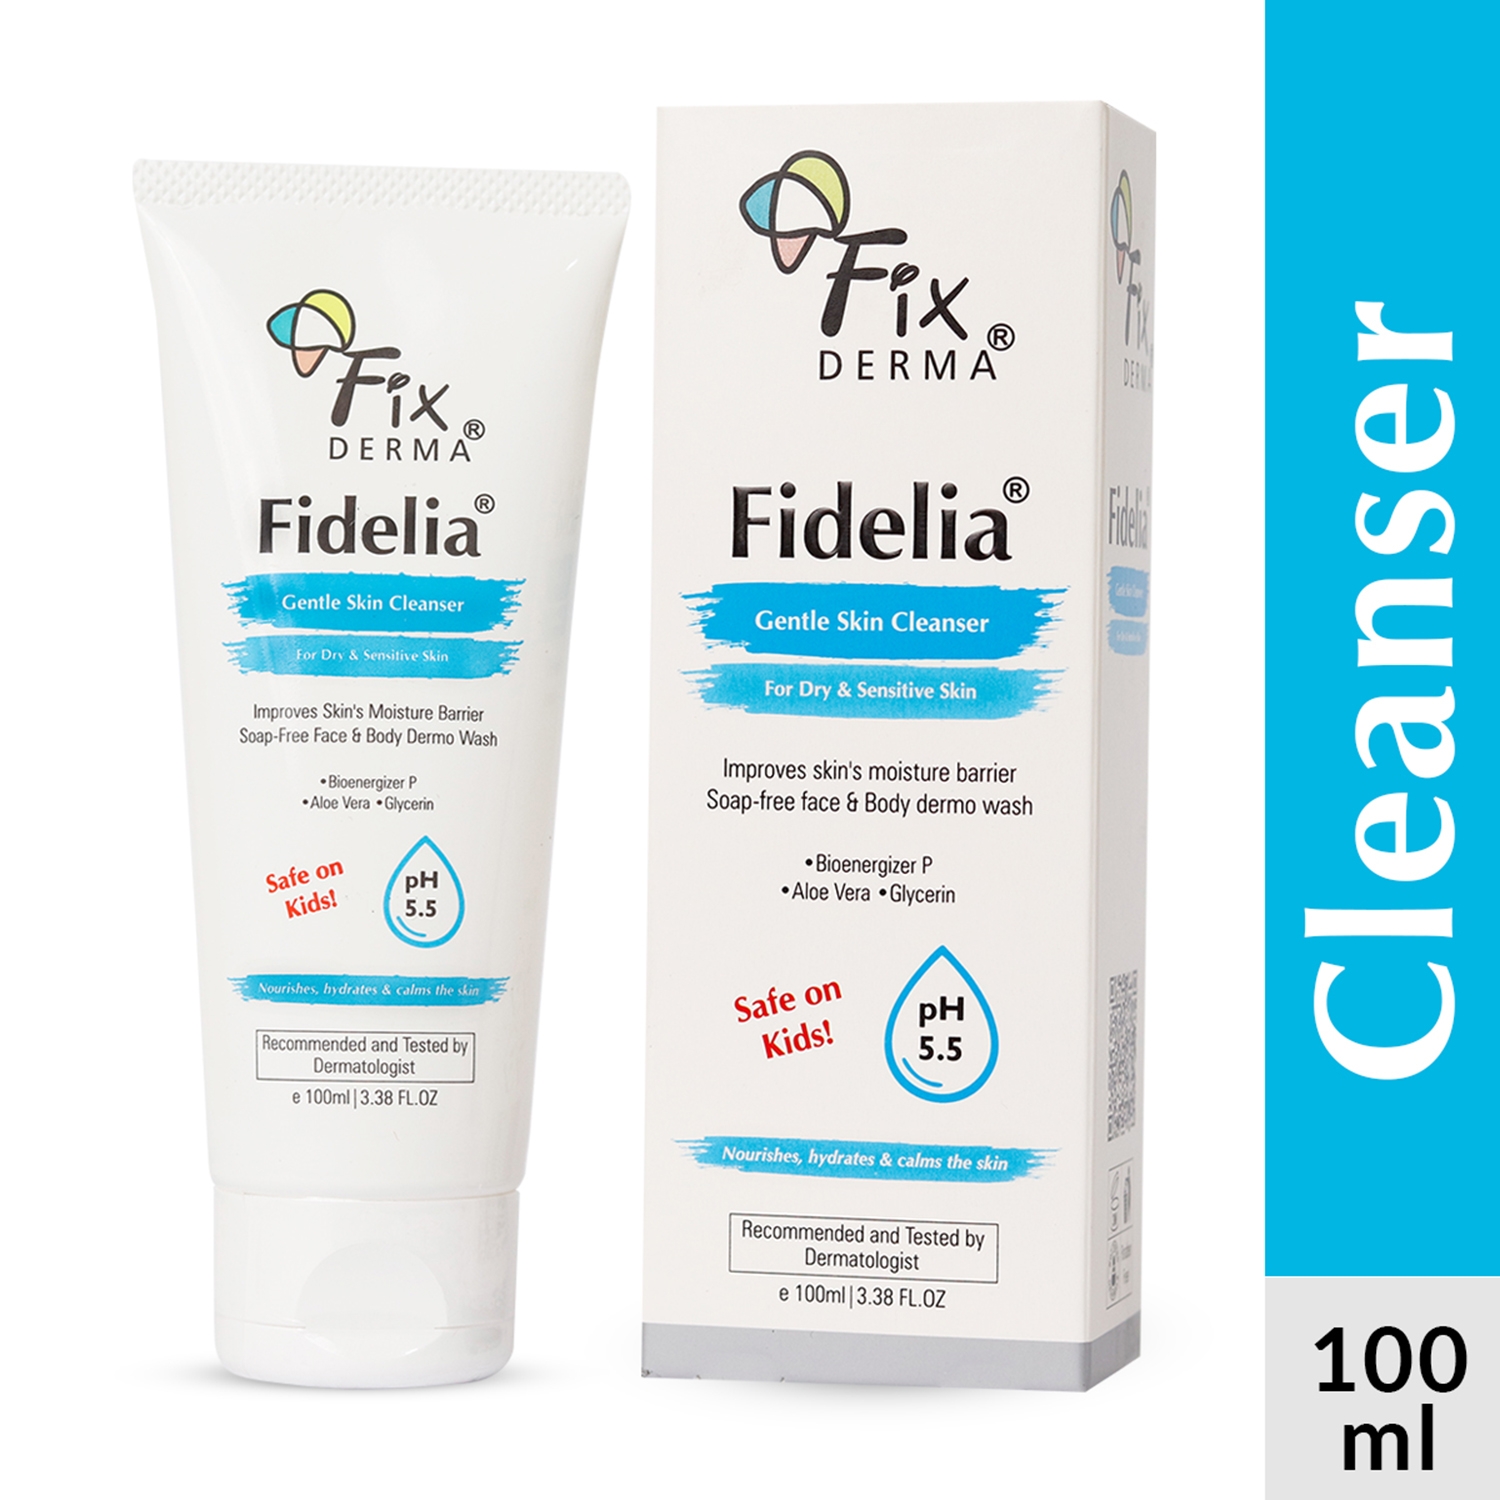 Fixderma | Fixderma Fidelia Gentle Skin Cleanser Facewash (100ml)